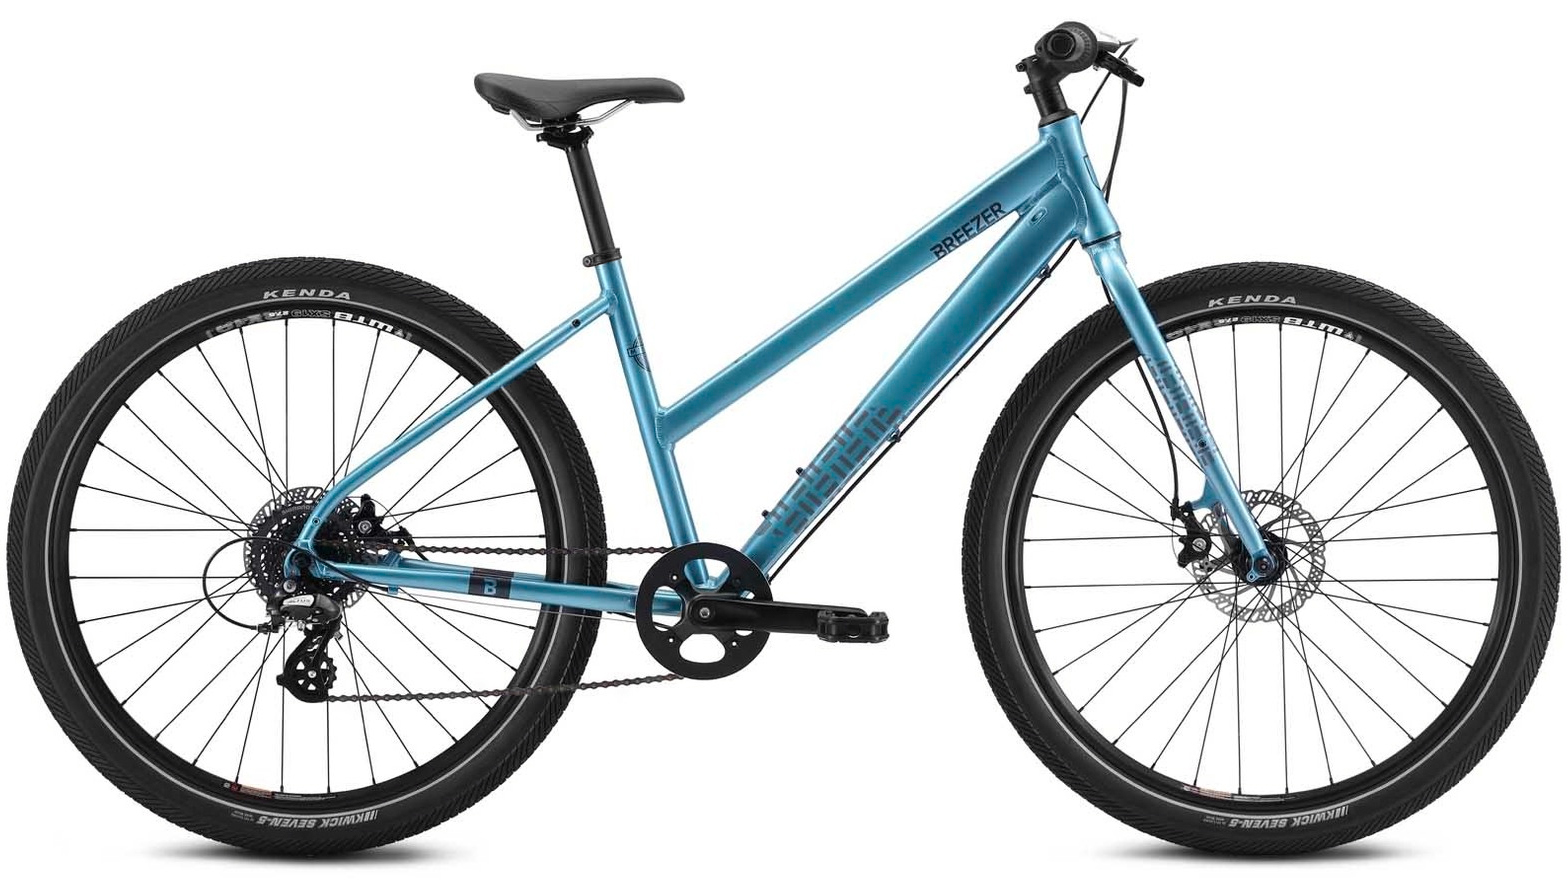 breezer midtown 1.7 hybrid bike for teens